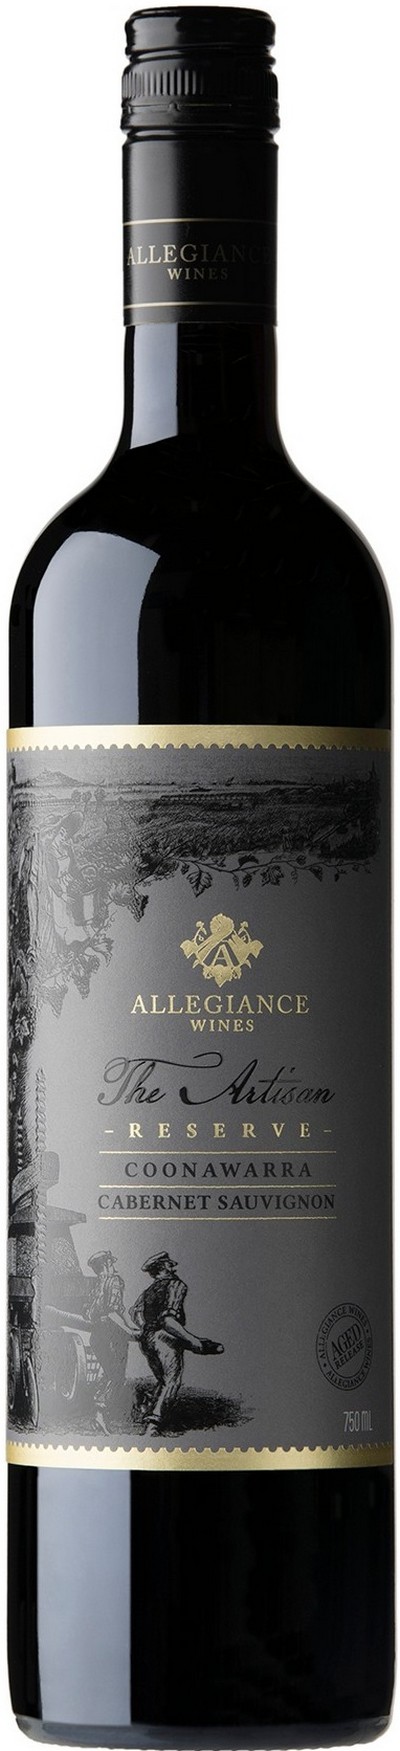 allegiance-wines-the-artisan-reserve-coonawarra-cabernet-sauvignon-2020